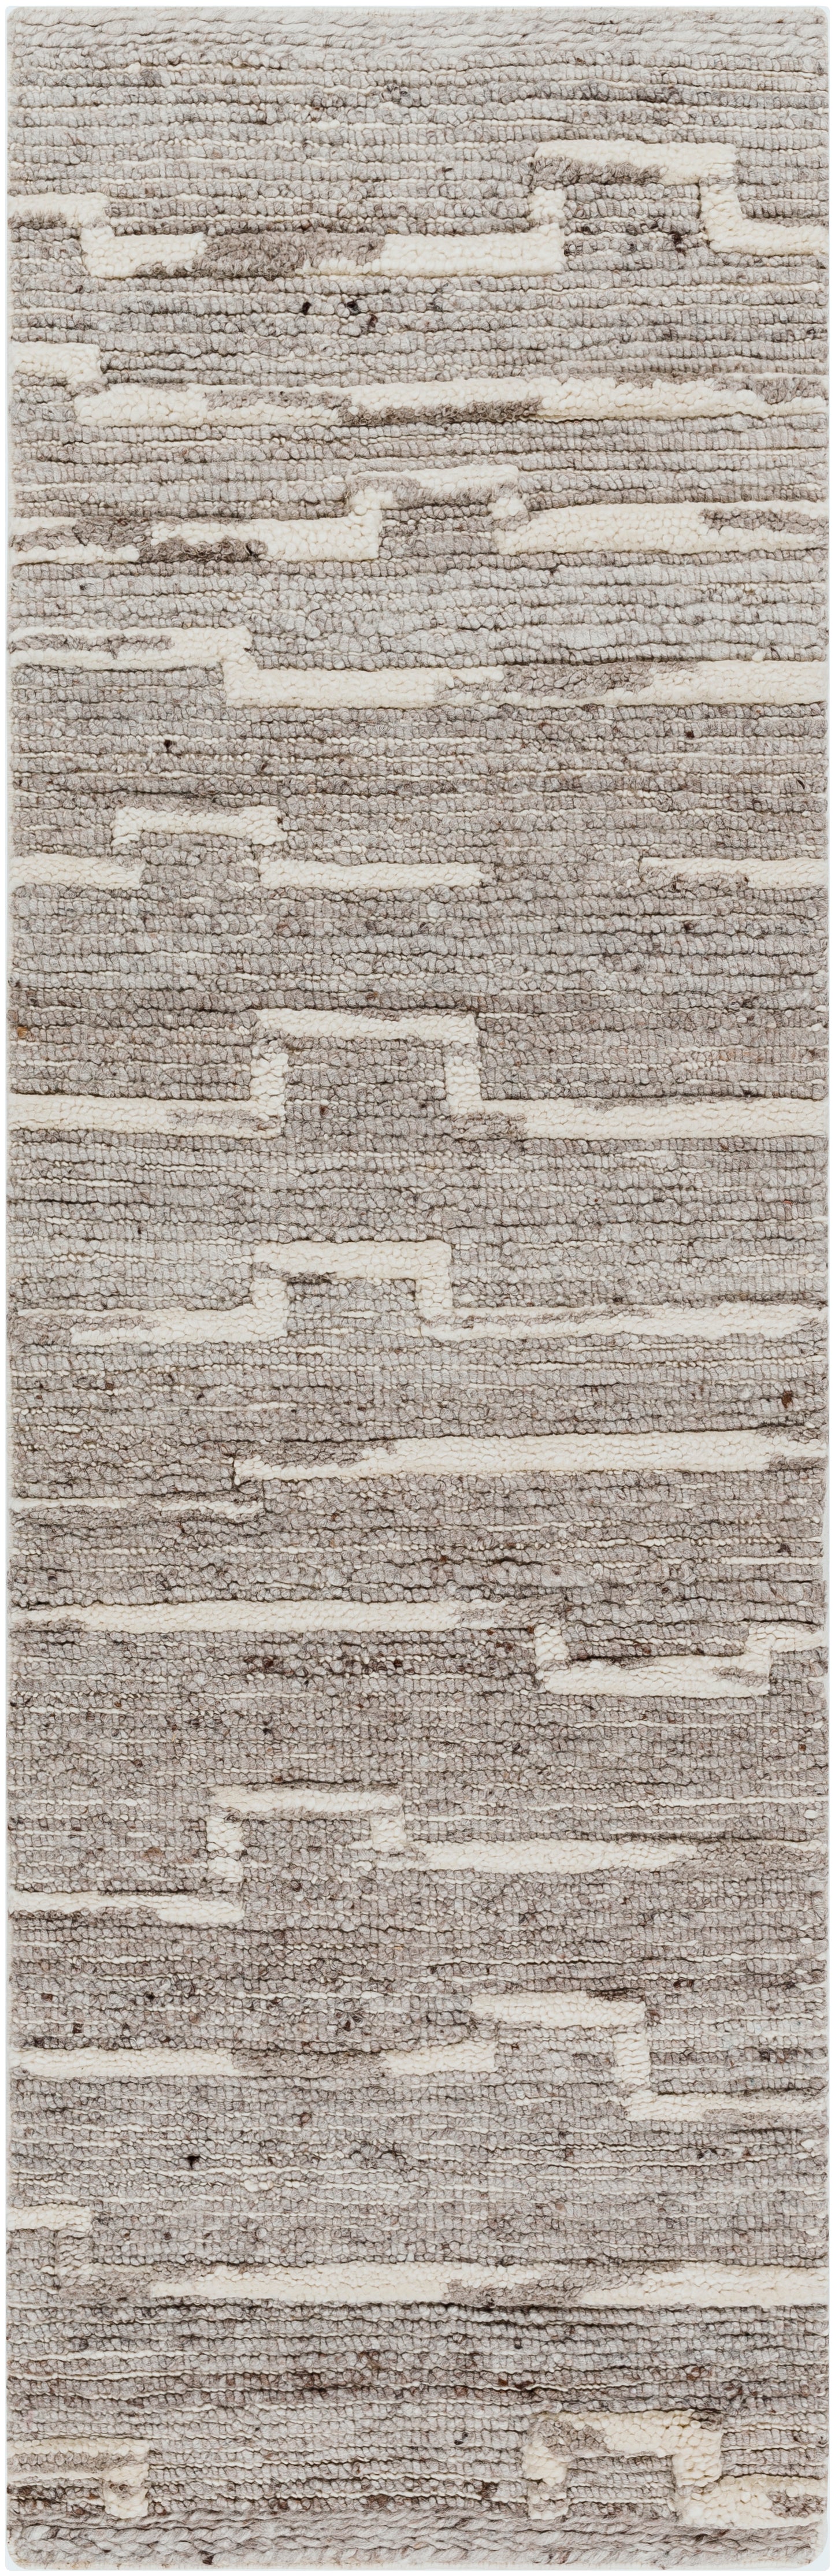 Manisa 30276 Hand Woven Wool Indoor Area Rug by Surya Rugs